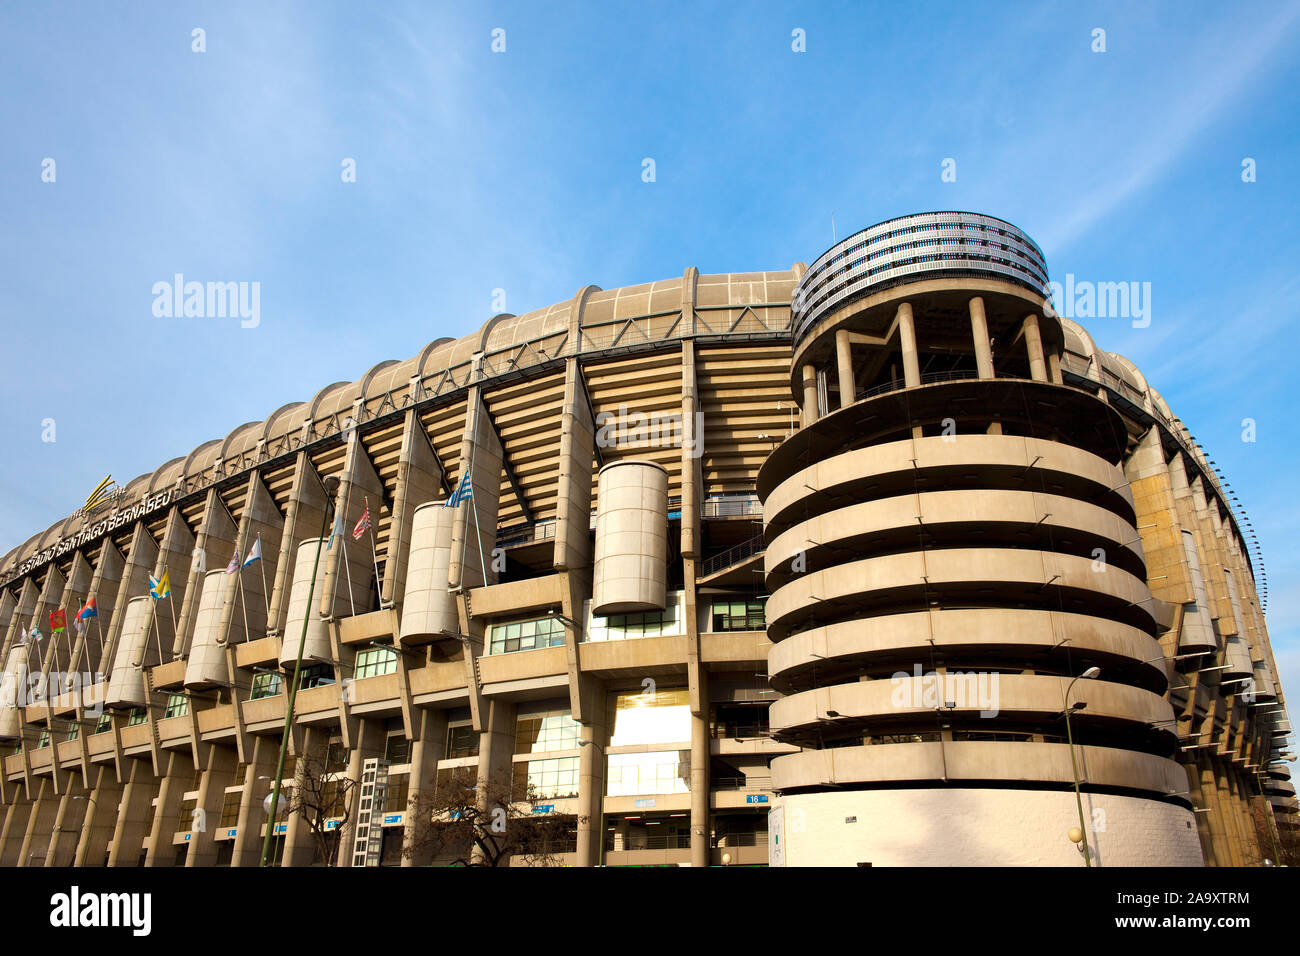 Madrid, Spain - Facade of Santiago Bernabeu Stadium, home for Real Madrid soccer team. Stock Photo